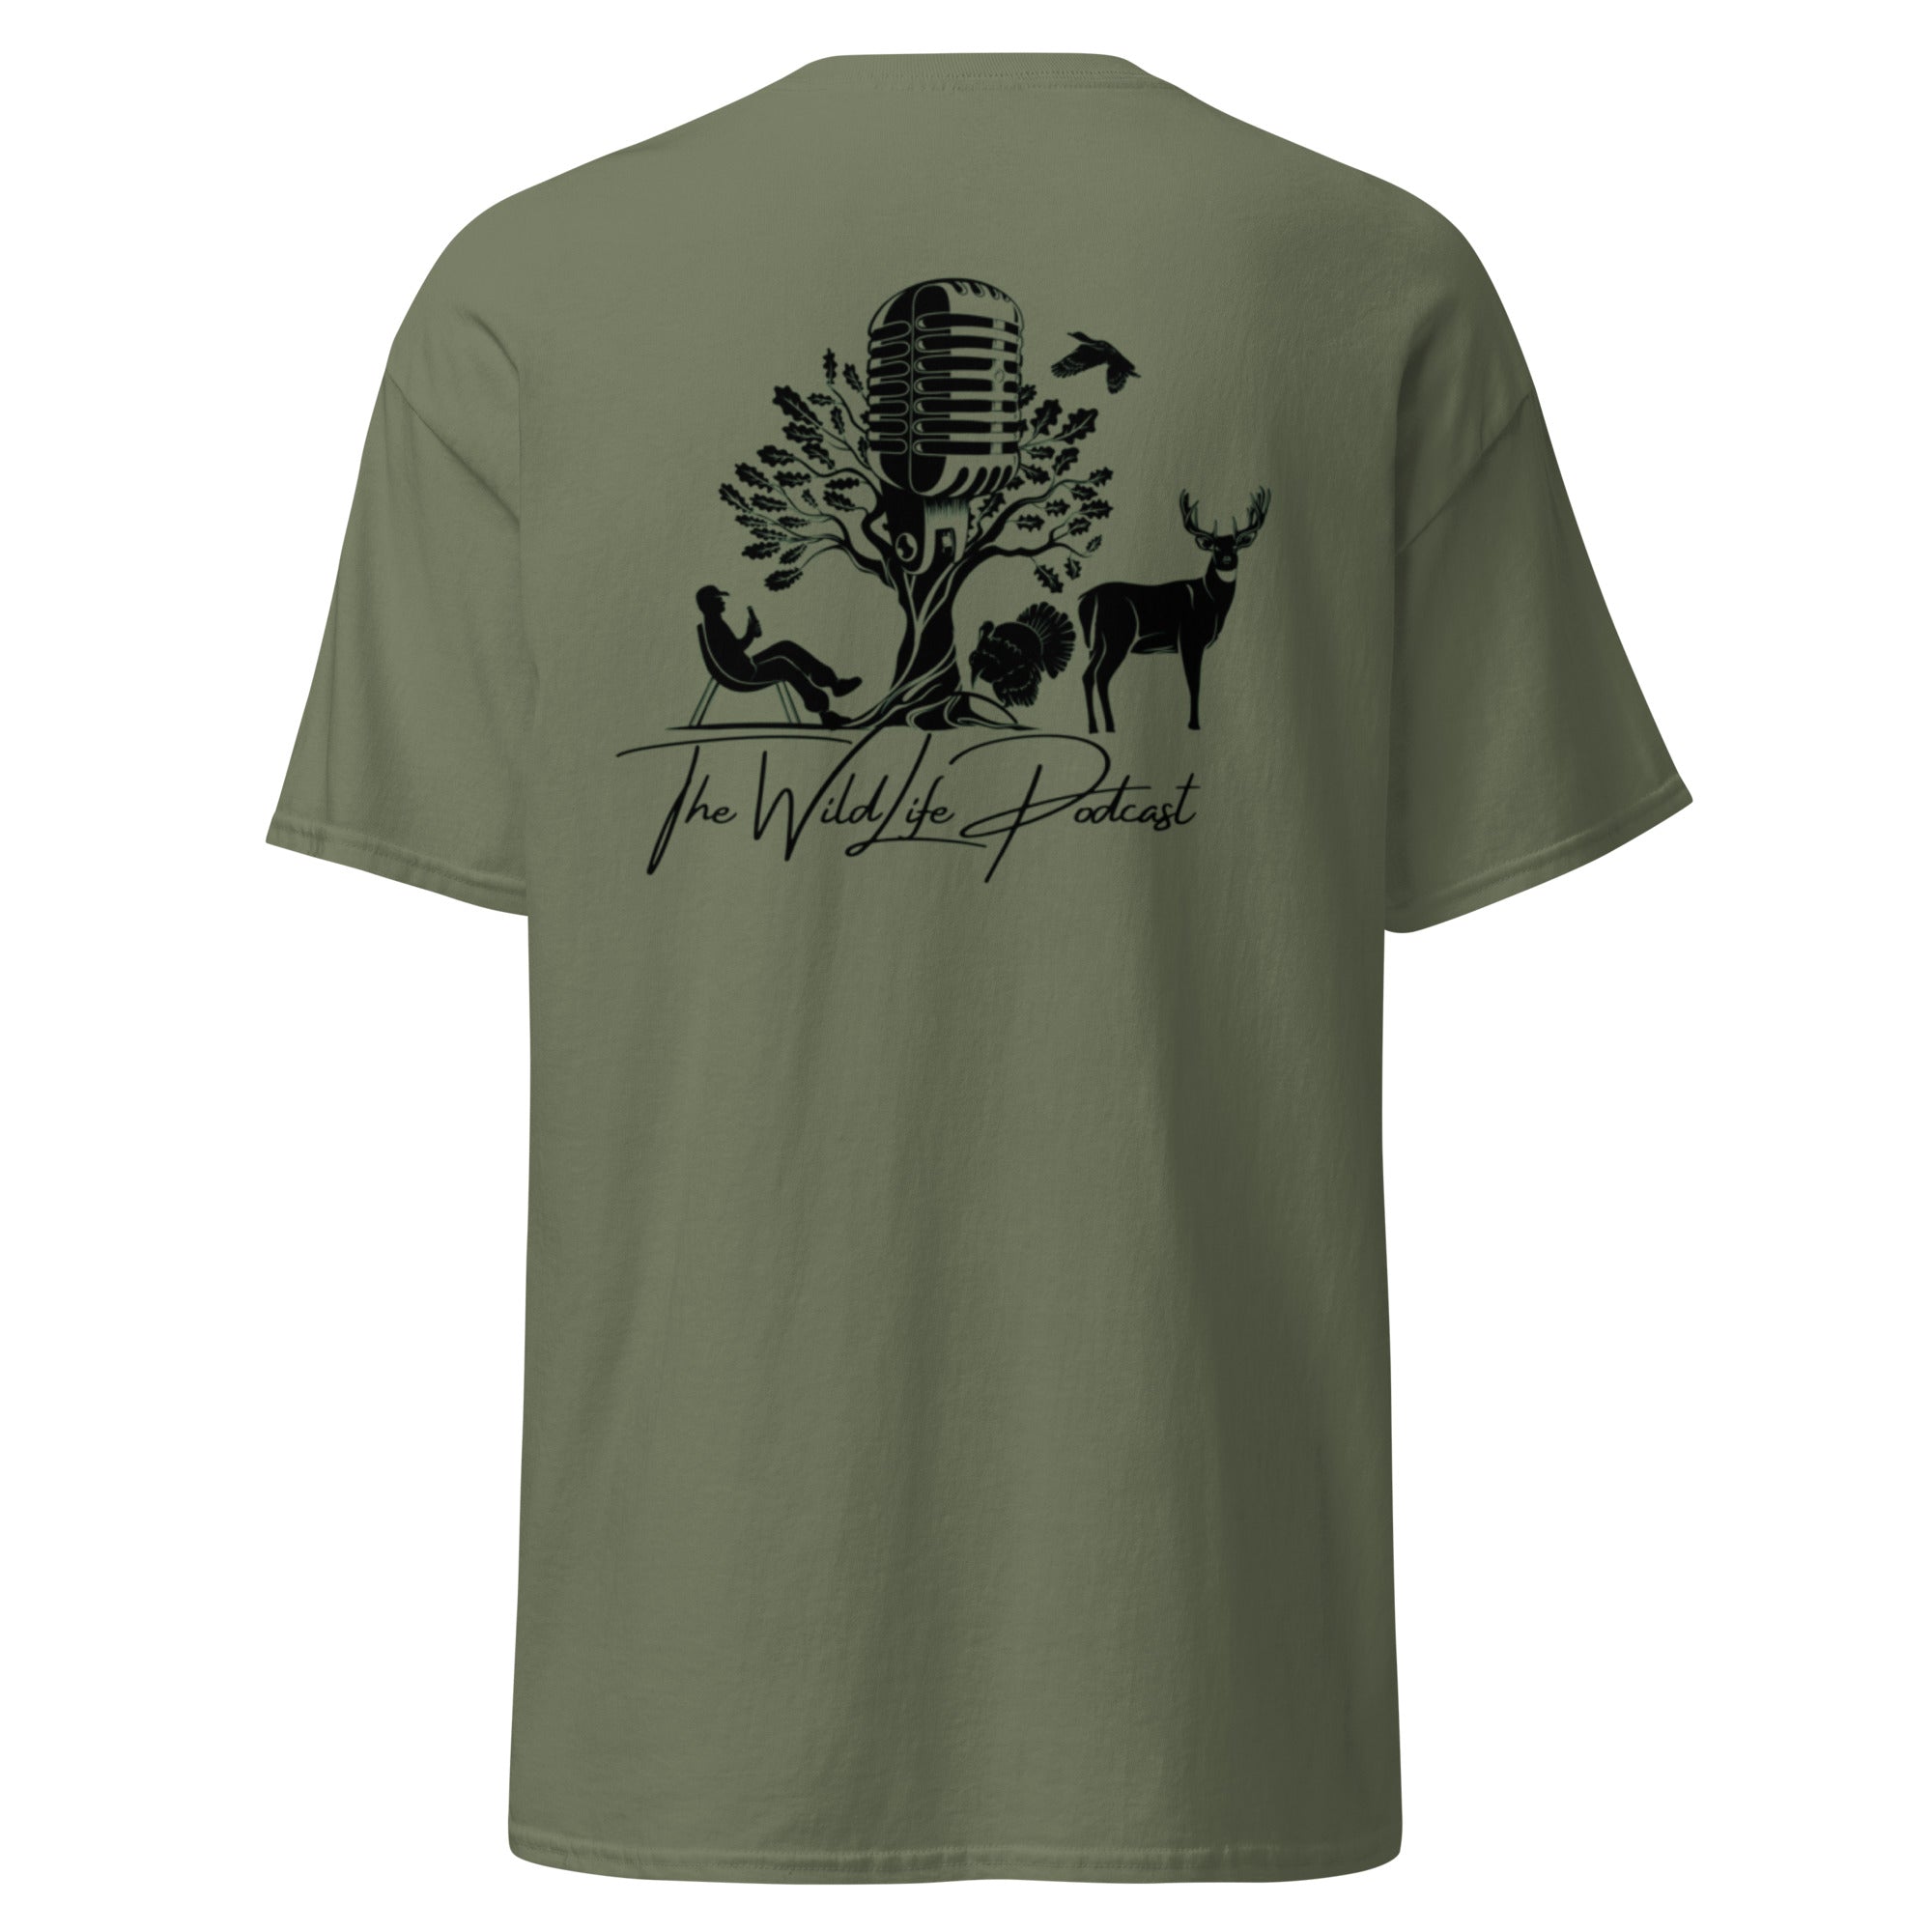 Wildlife Podcast shirts